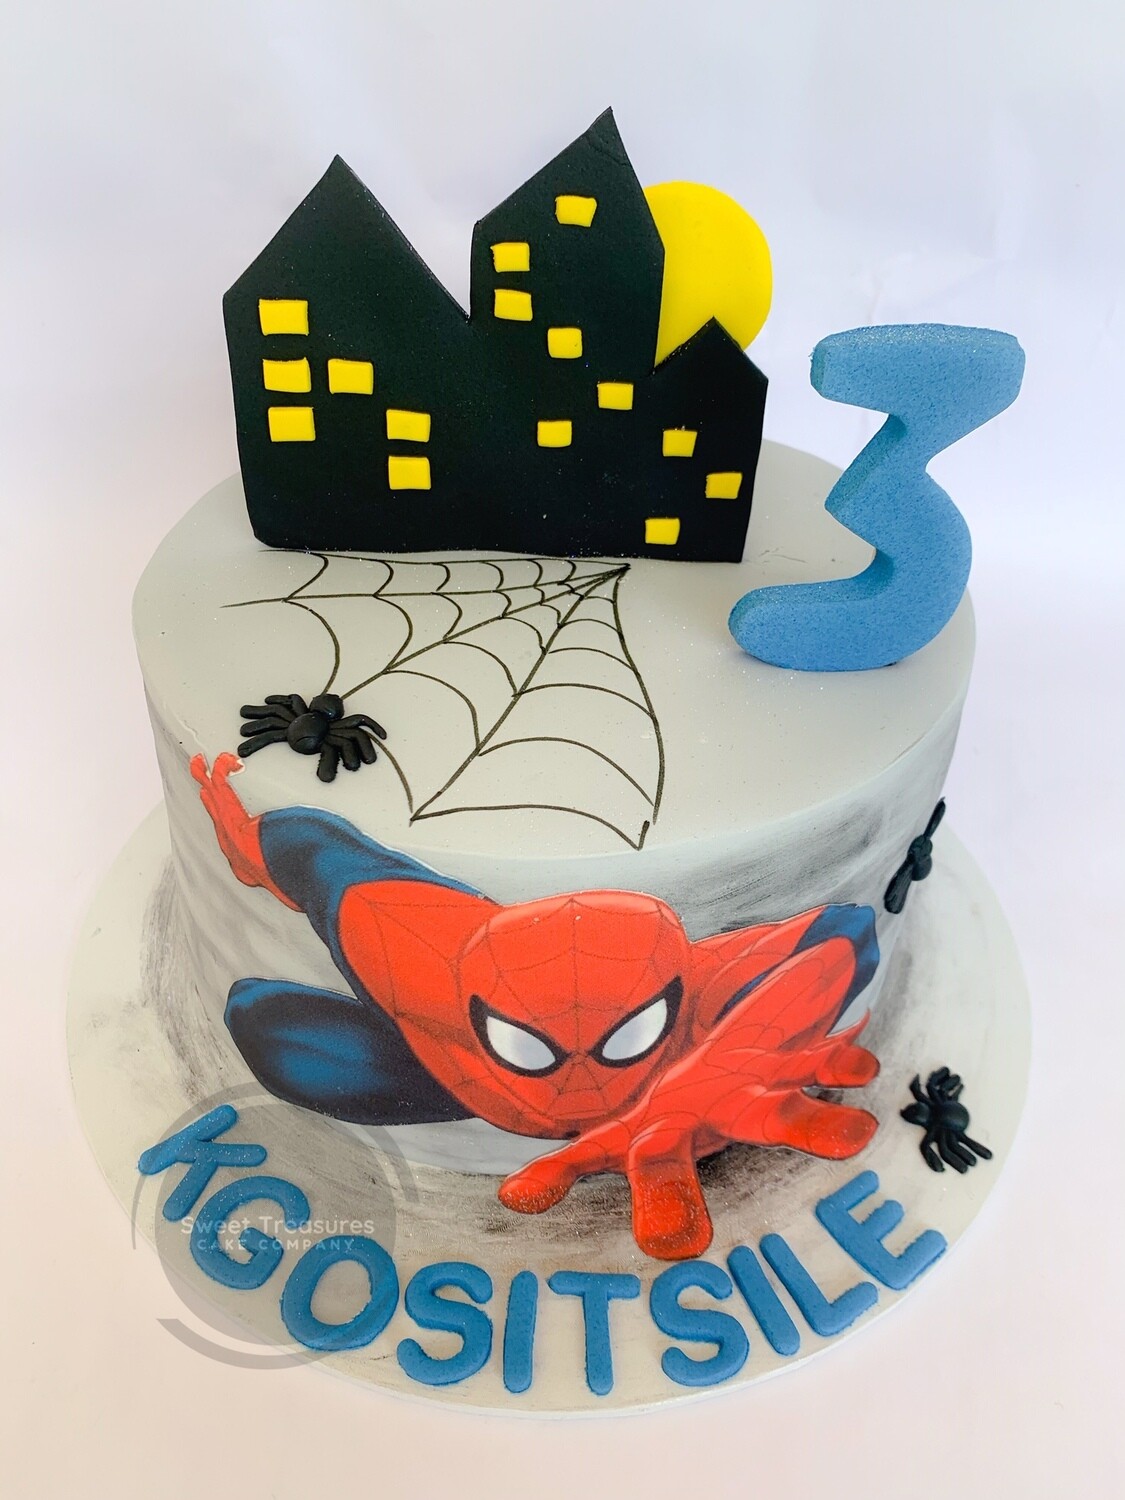 Spiderman Single tier Cake